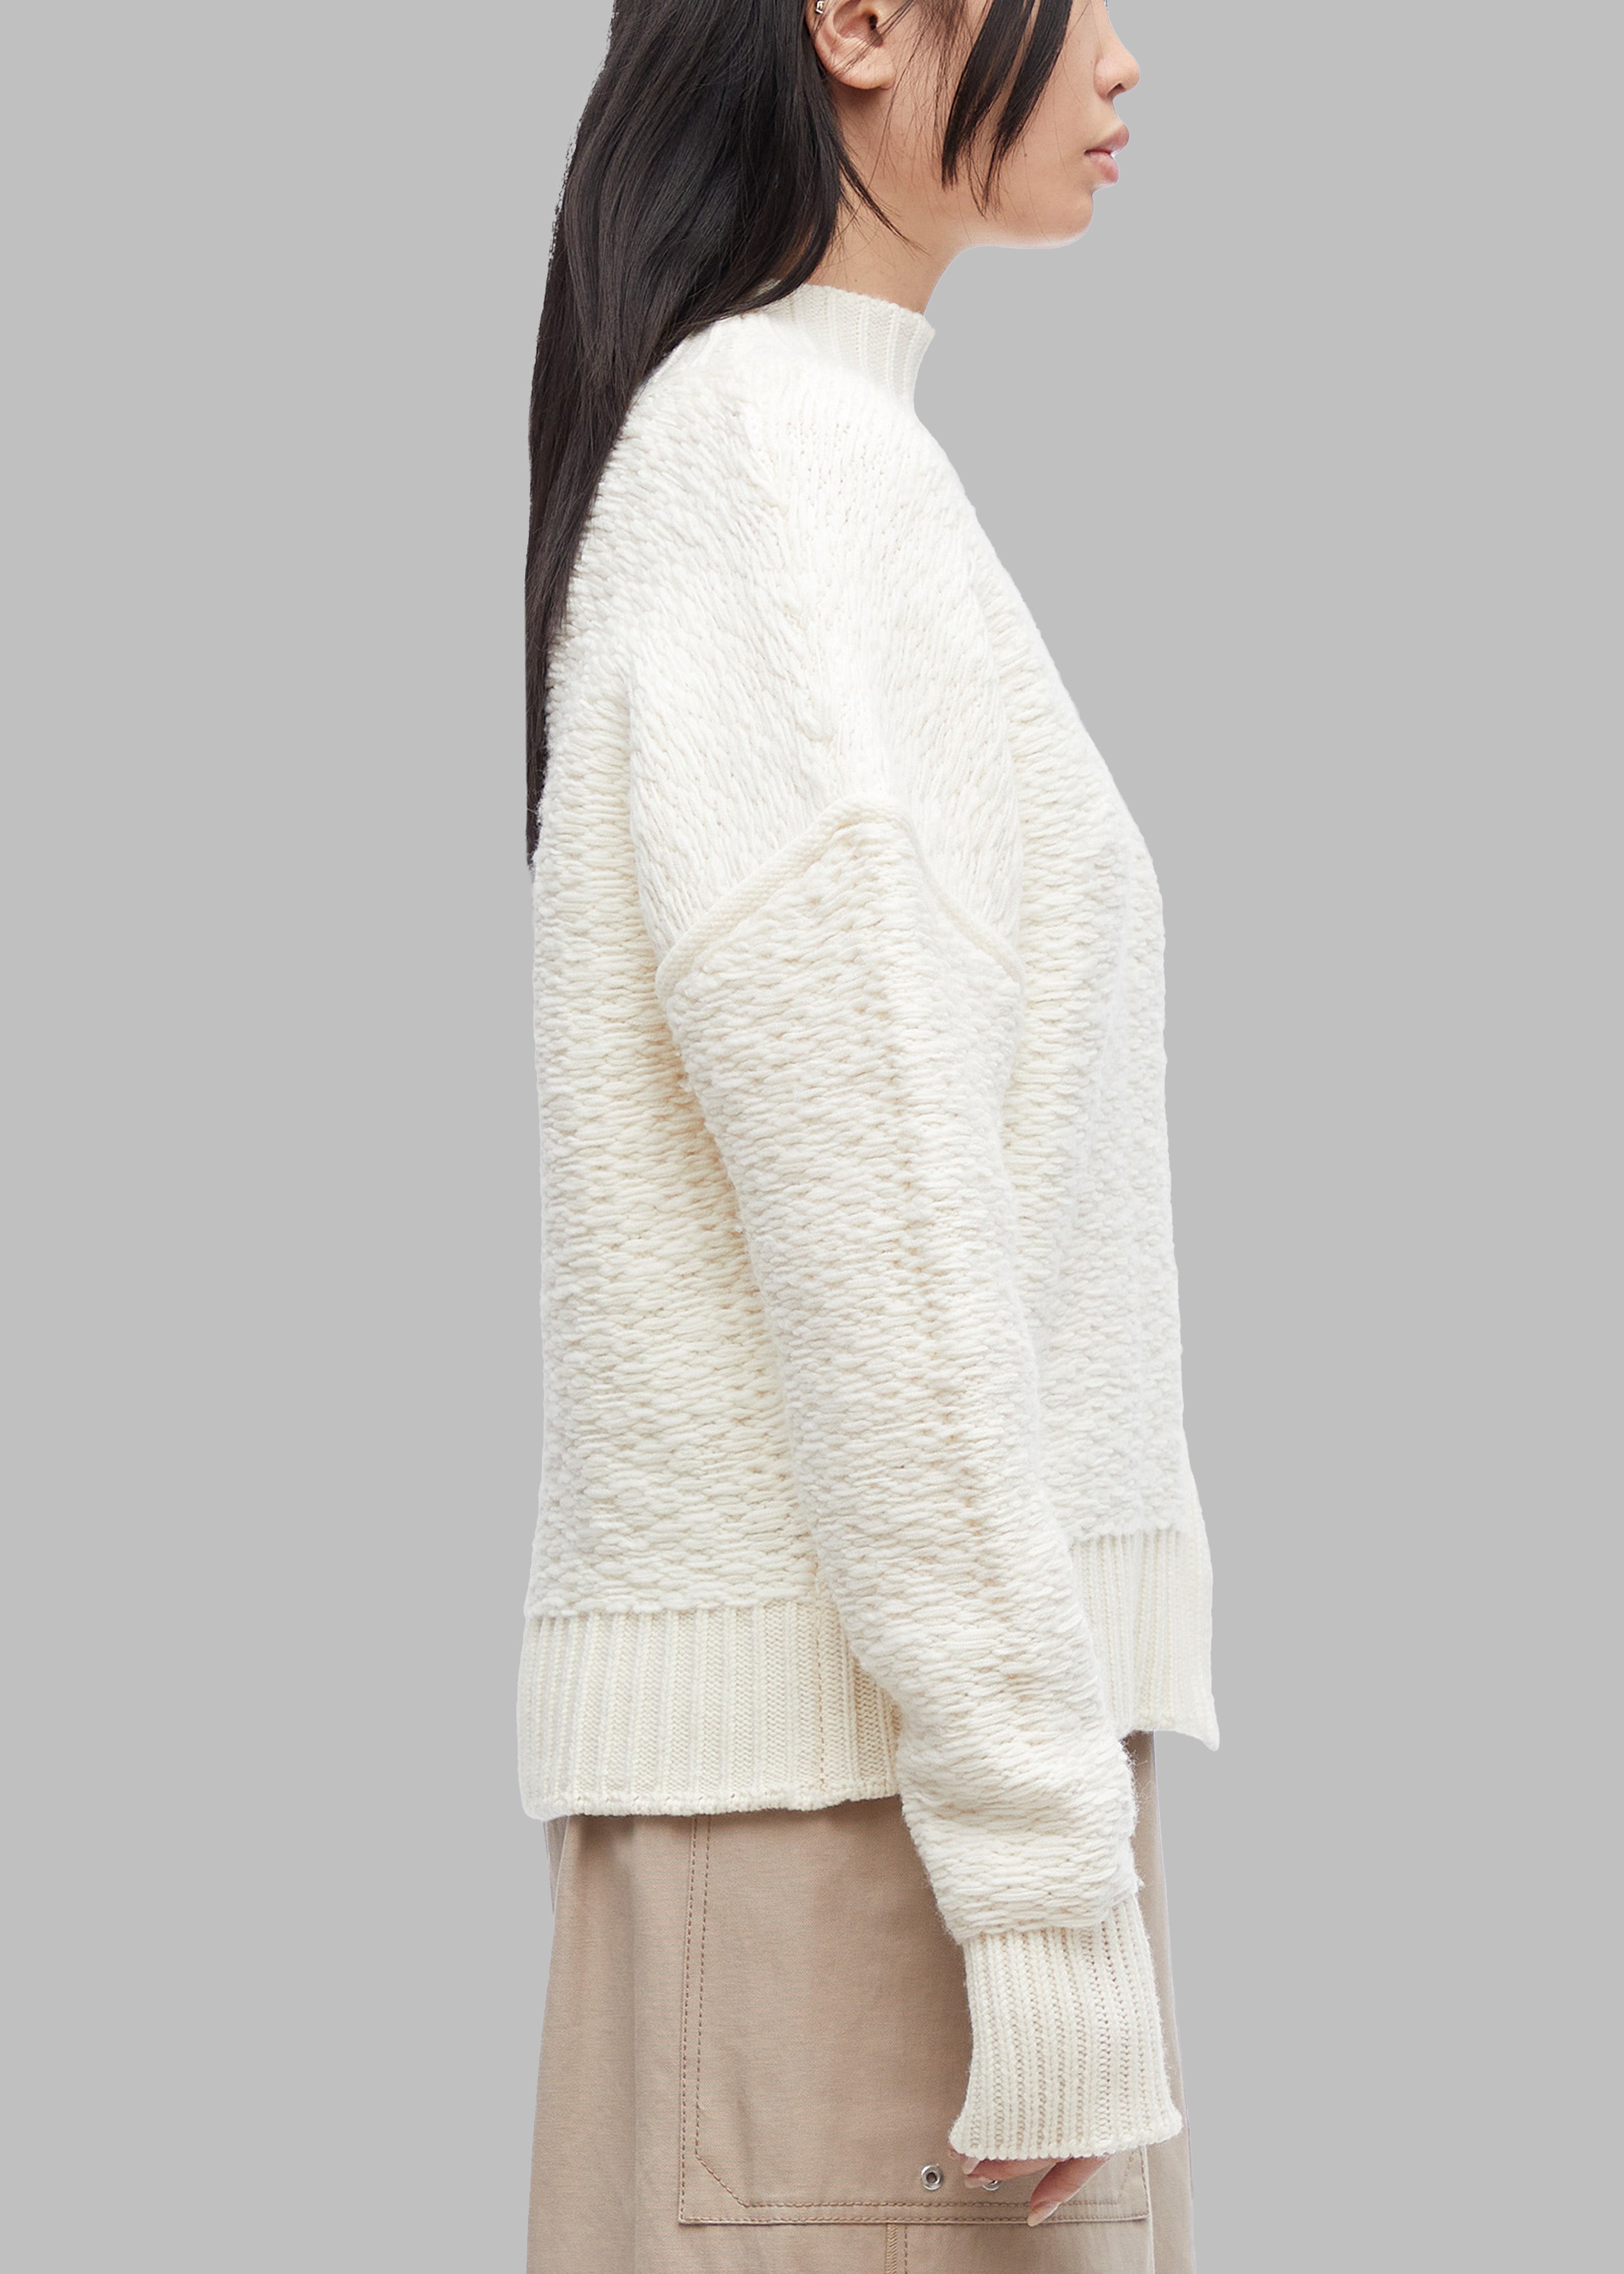 3.1 Phillip Lim Wool Jacquard Turtleneck Sweater - Ivory - 5